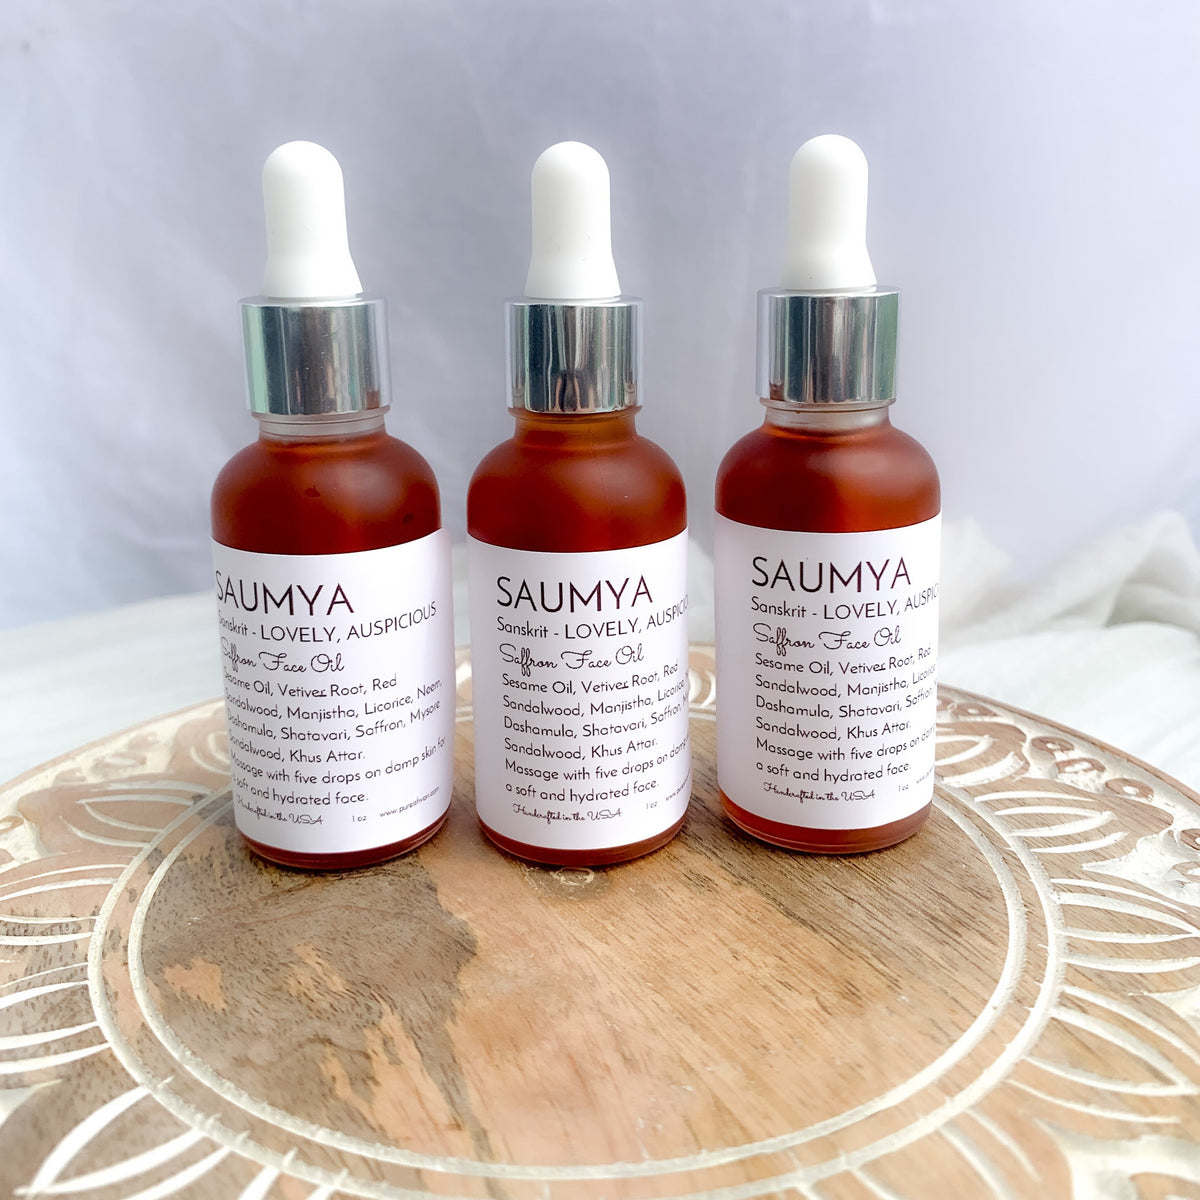 SAUMYA - Saffron Face Oil